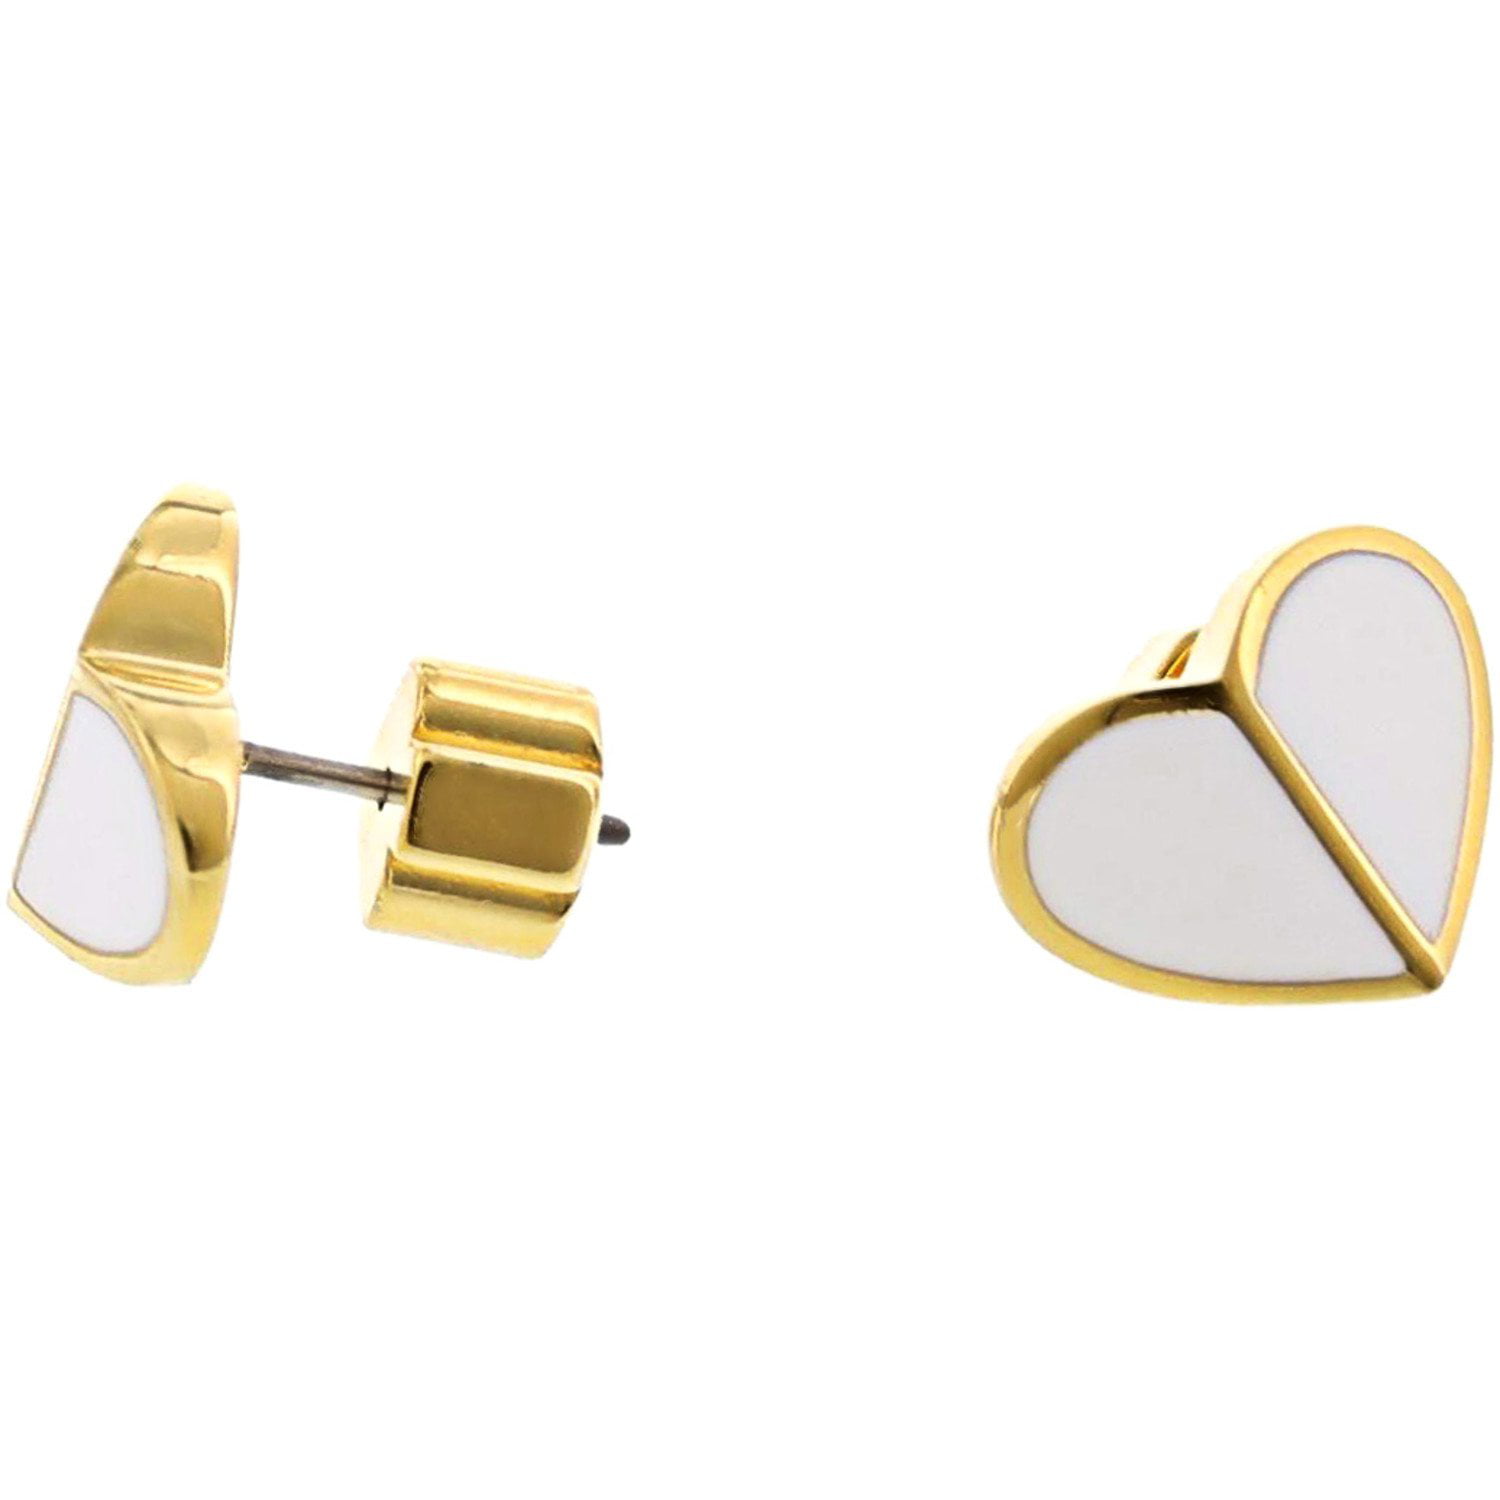 Kate Spade New York Heritage Spade Small Heart Studs Earrings 